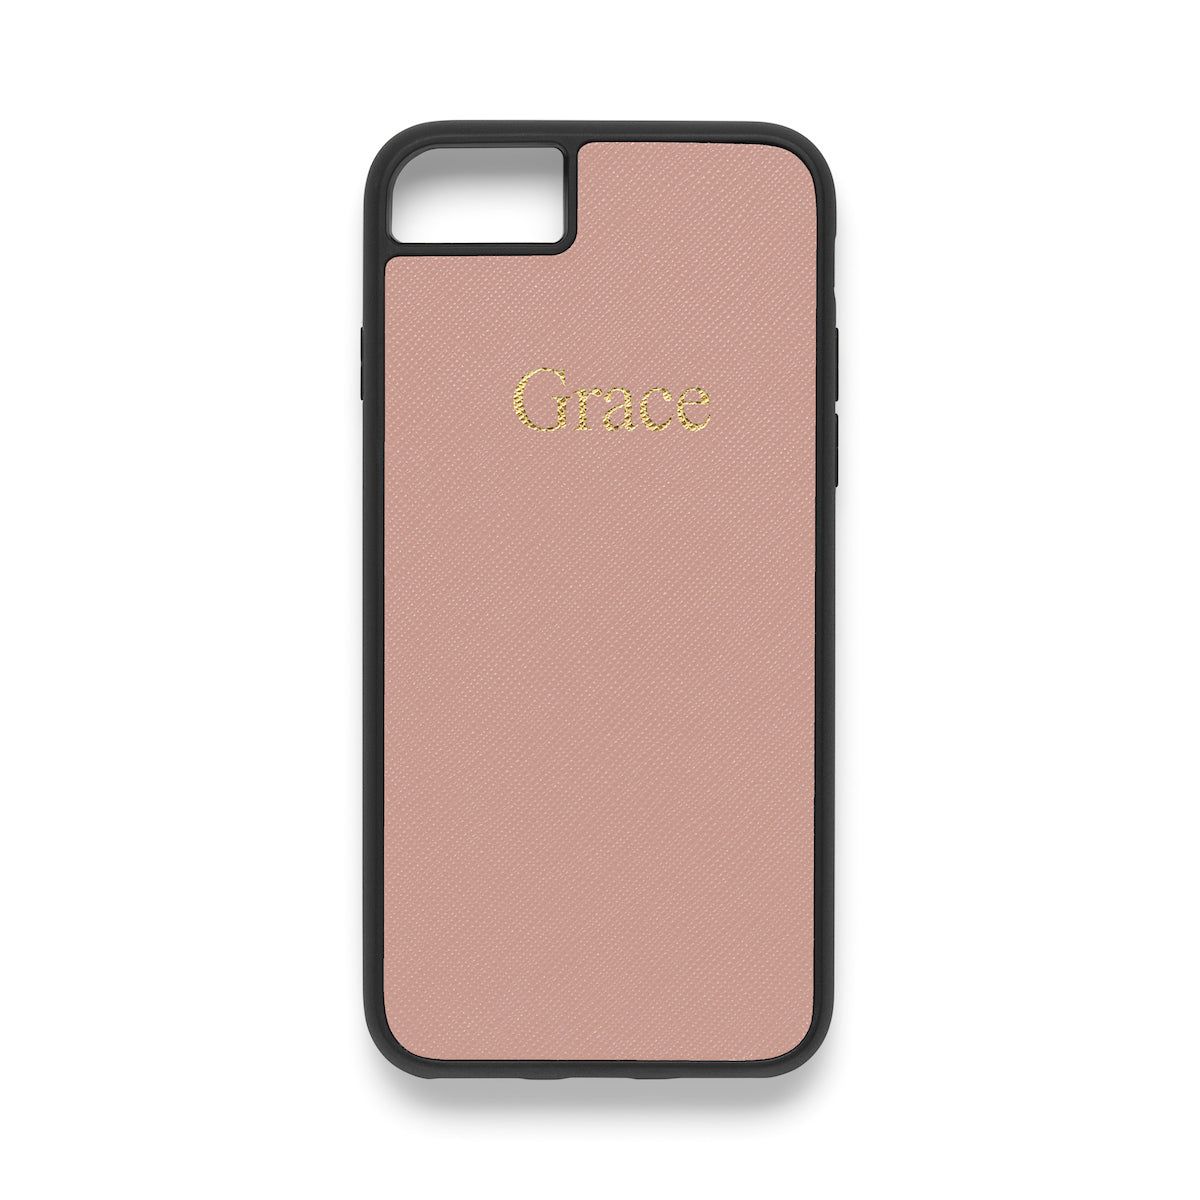 iPhone SE Case - Taupe